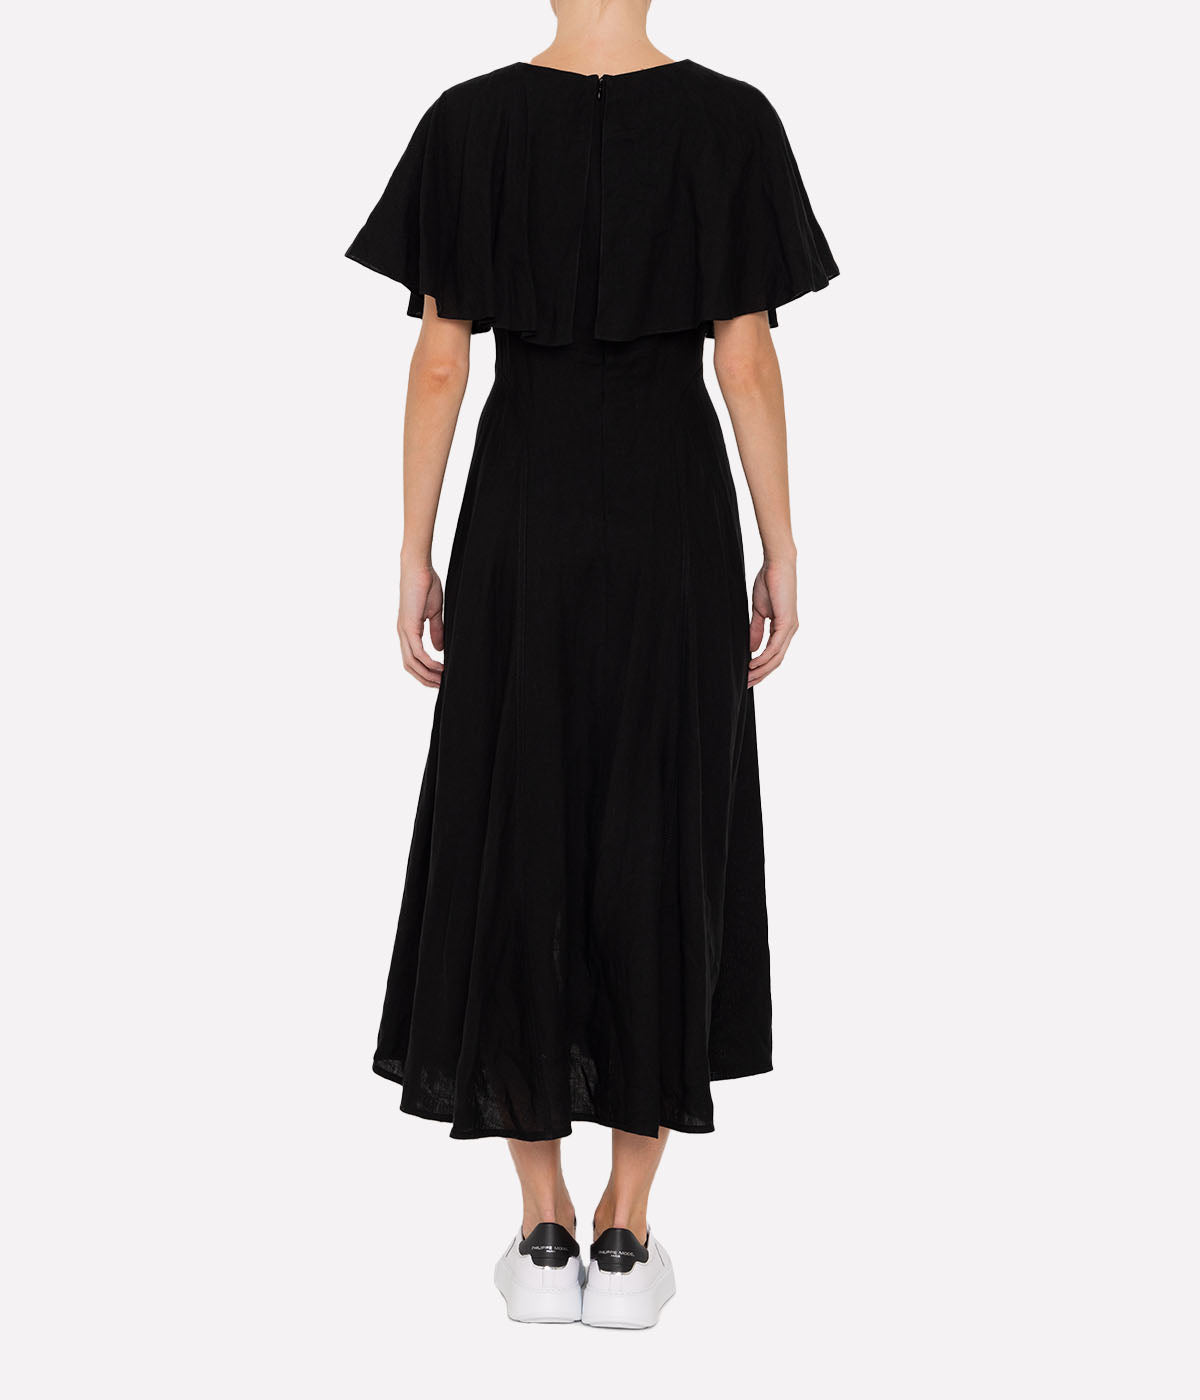 Delphine Dress in Black